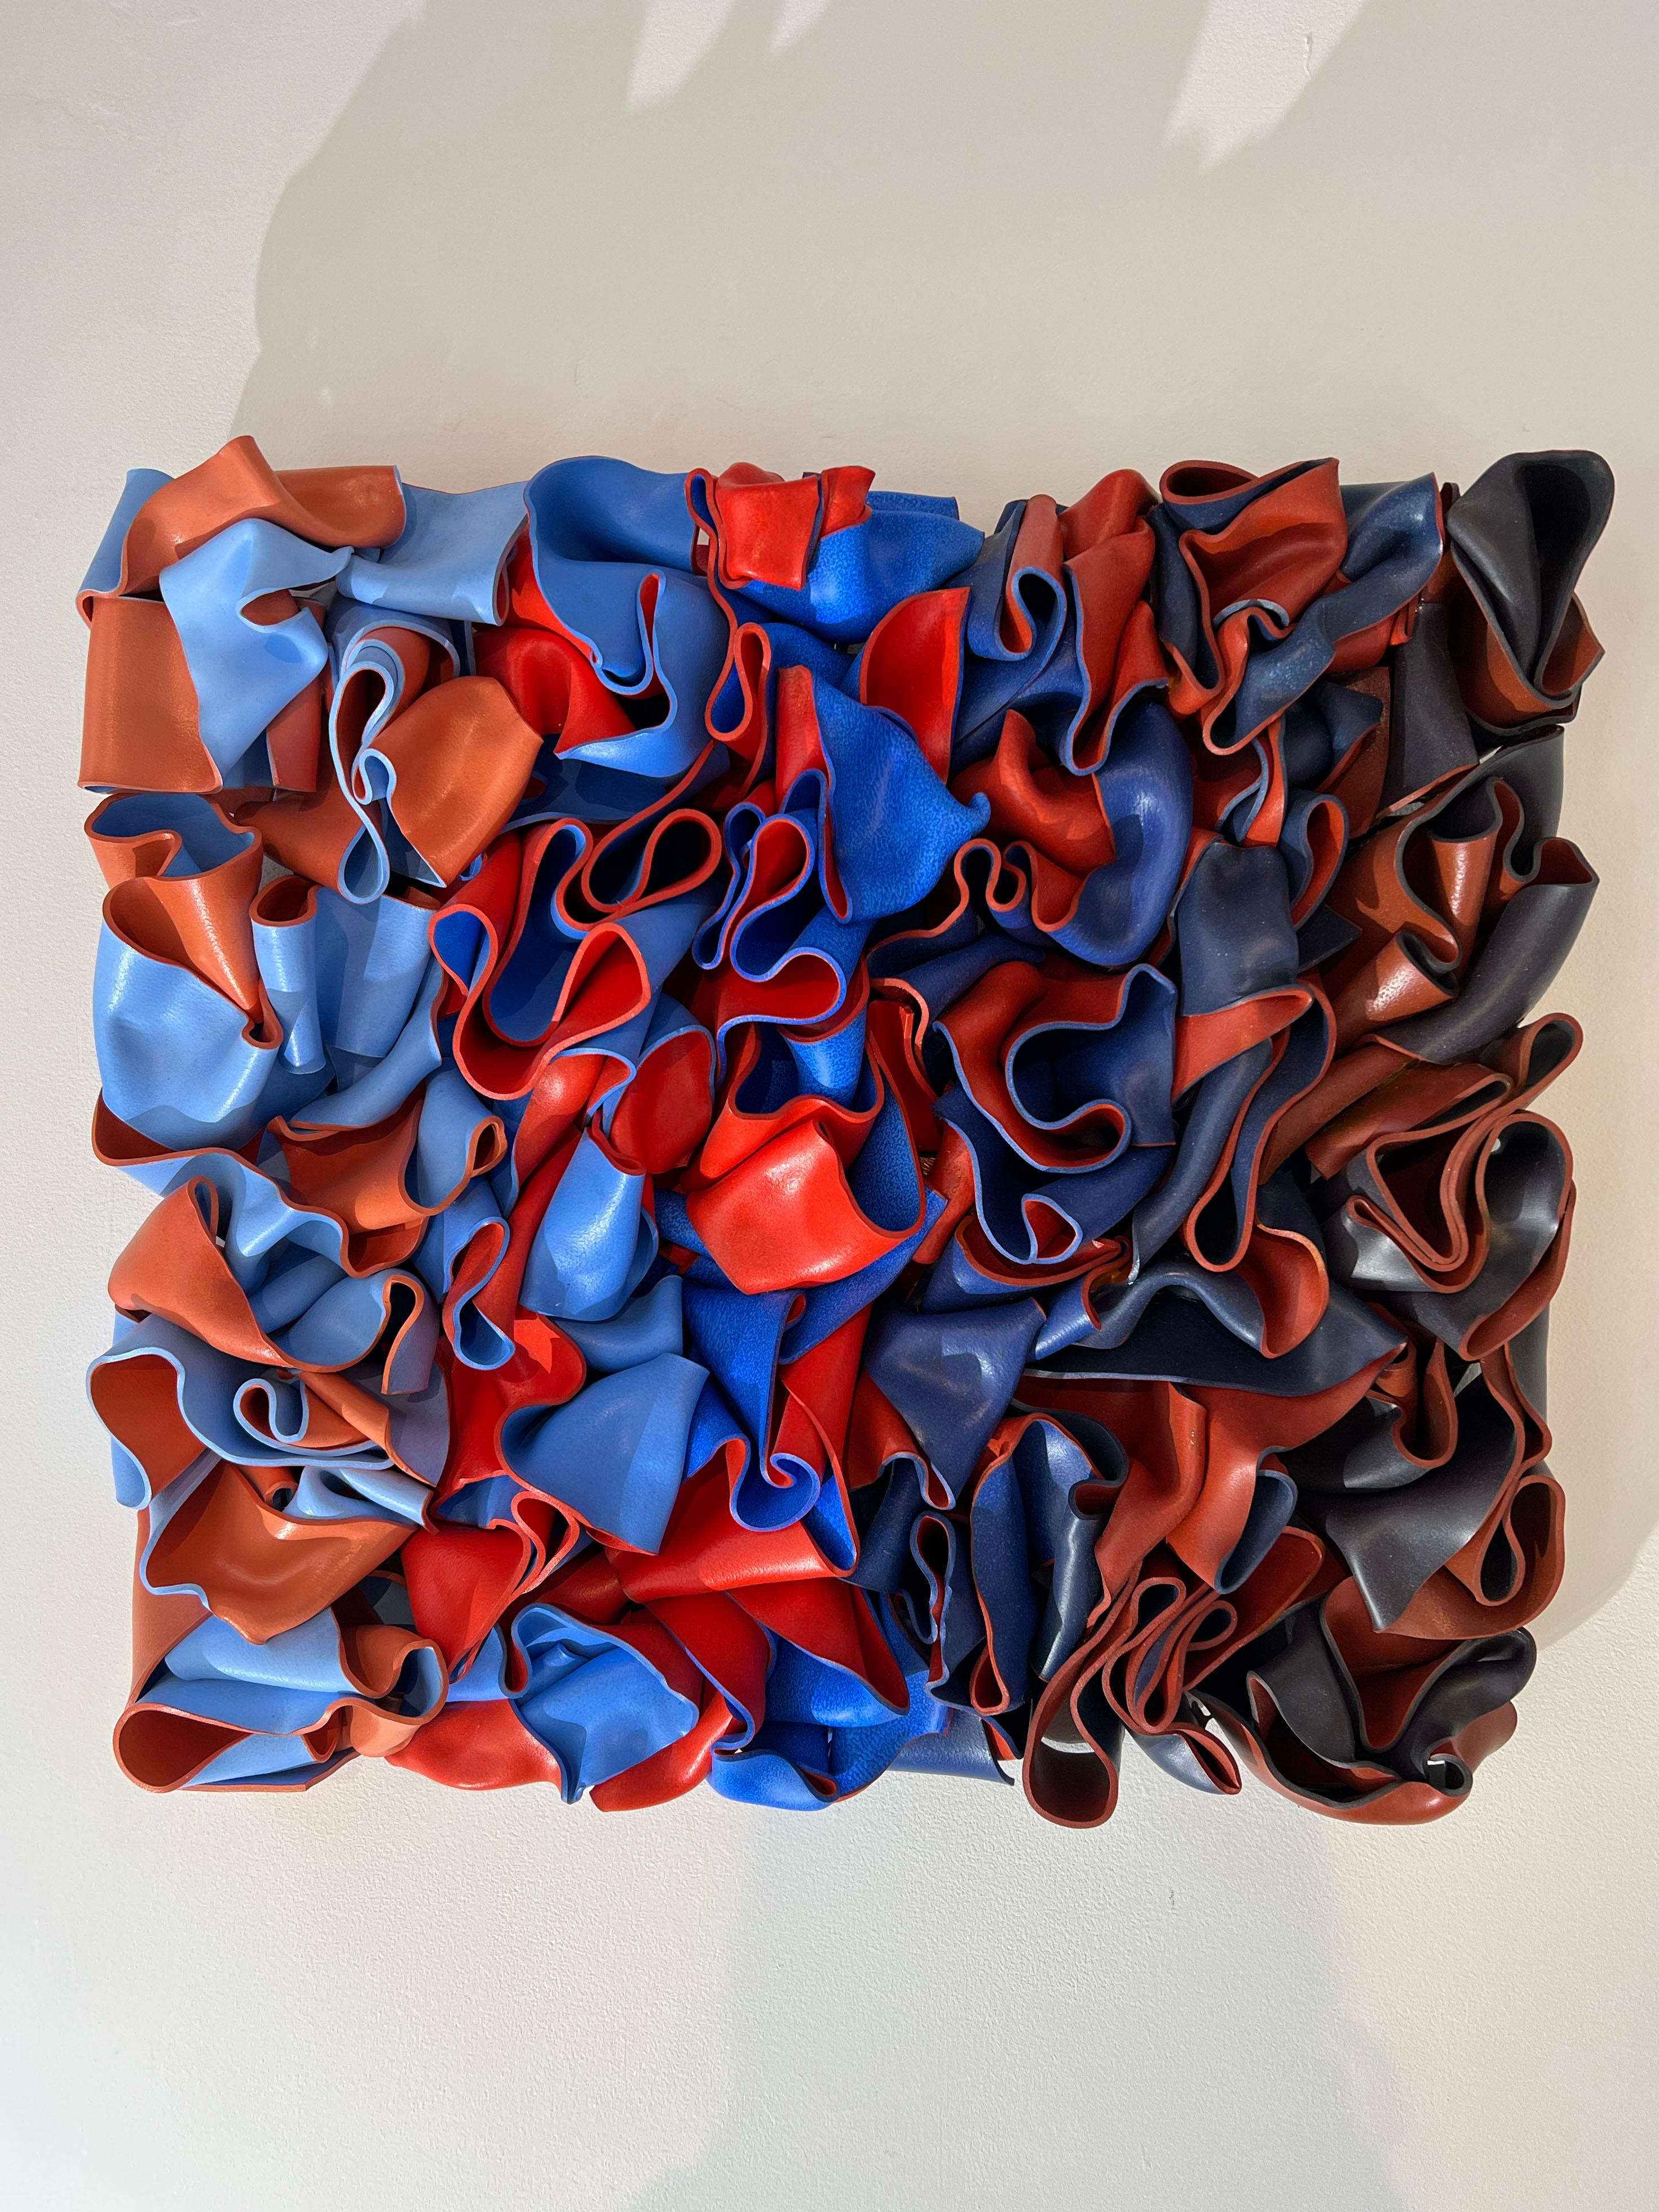 Prinsman - Abstract Art by Rick Lazes